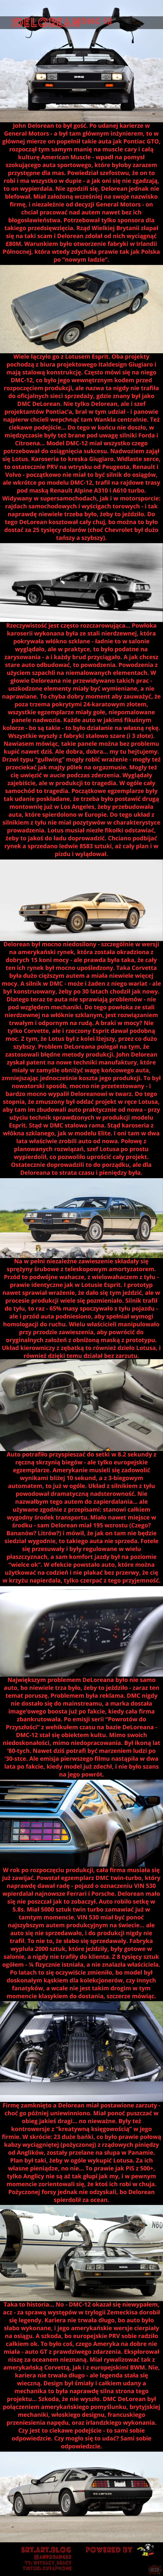 DeLorean DMC-12 [1981]